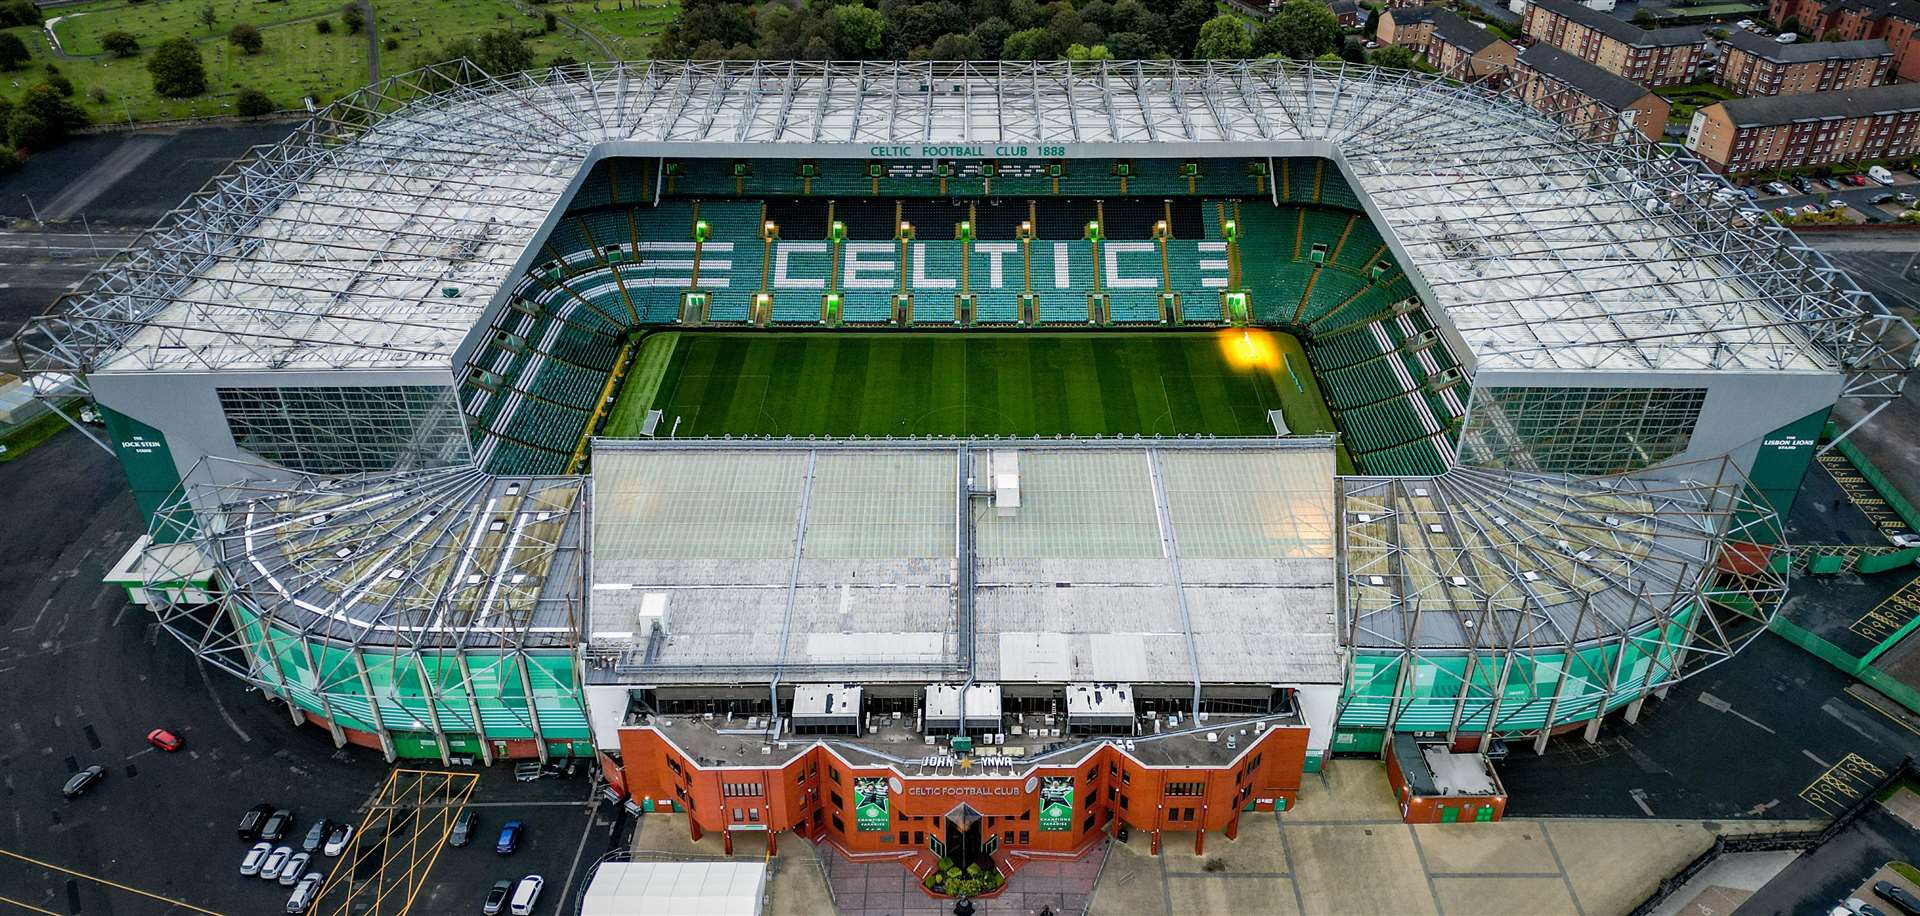 Celtic Park, home of the Scottish champions Celtic.